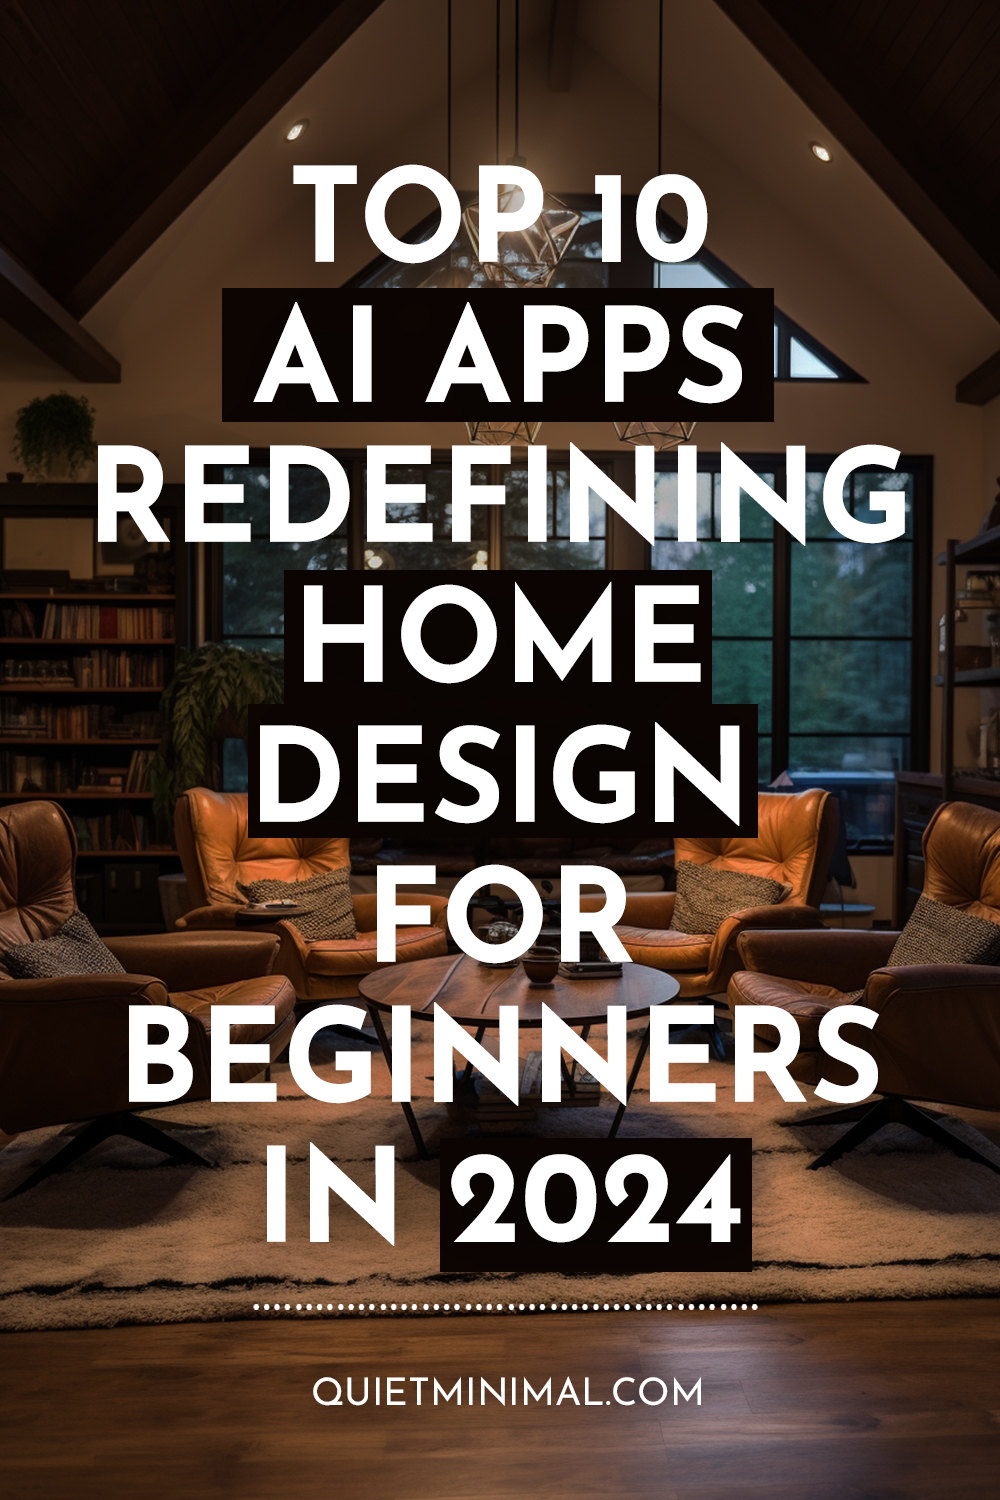 Top 10 AI interior design apps revolutionizing home design for beginners in 2024.